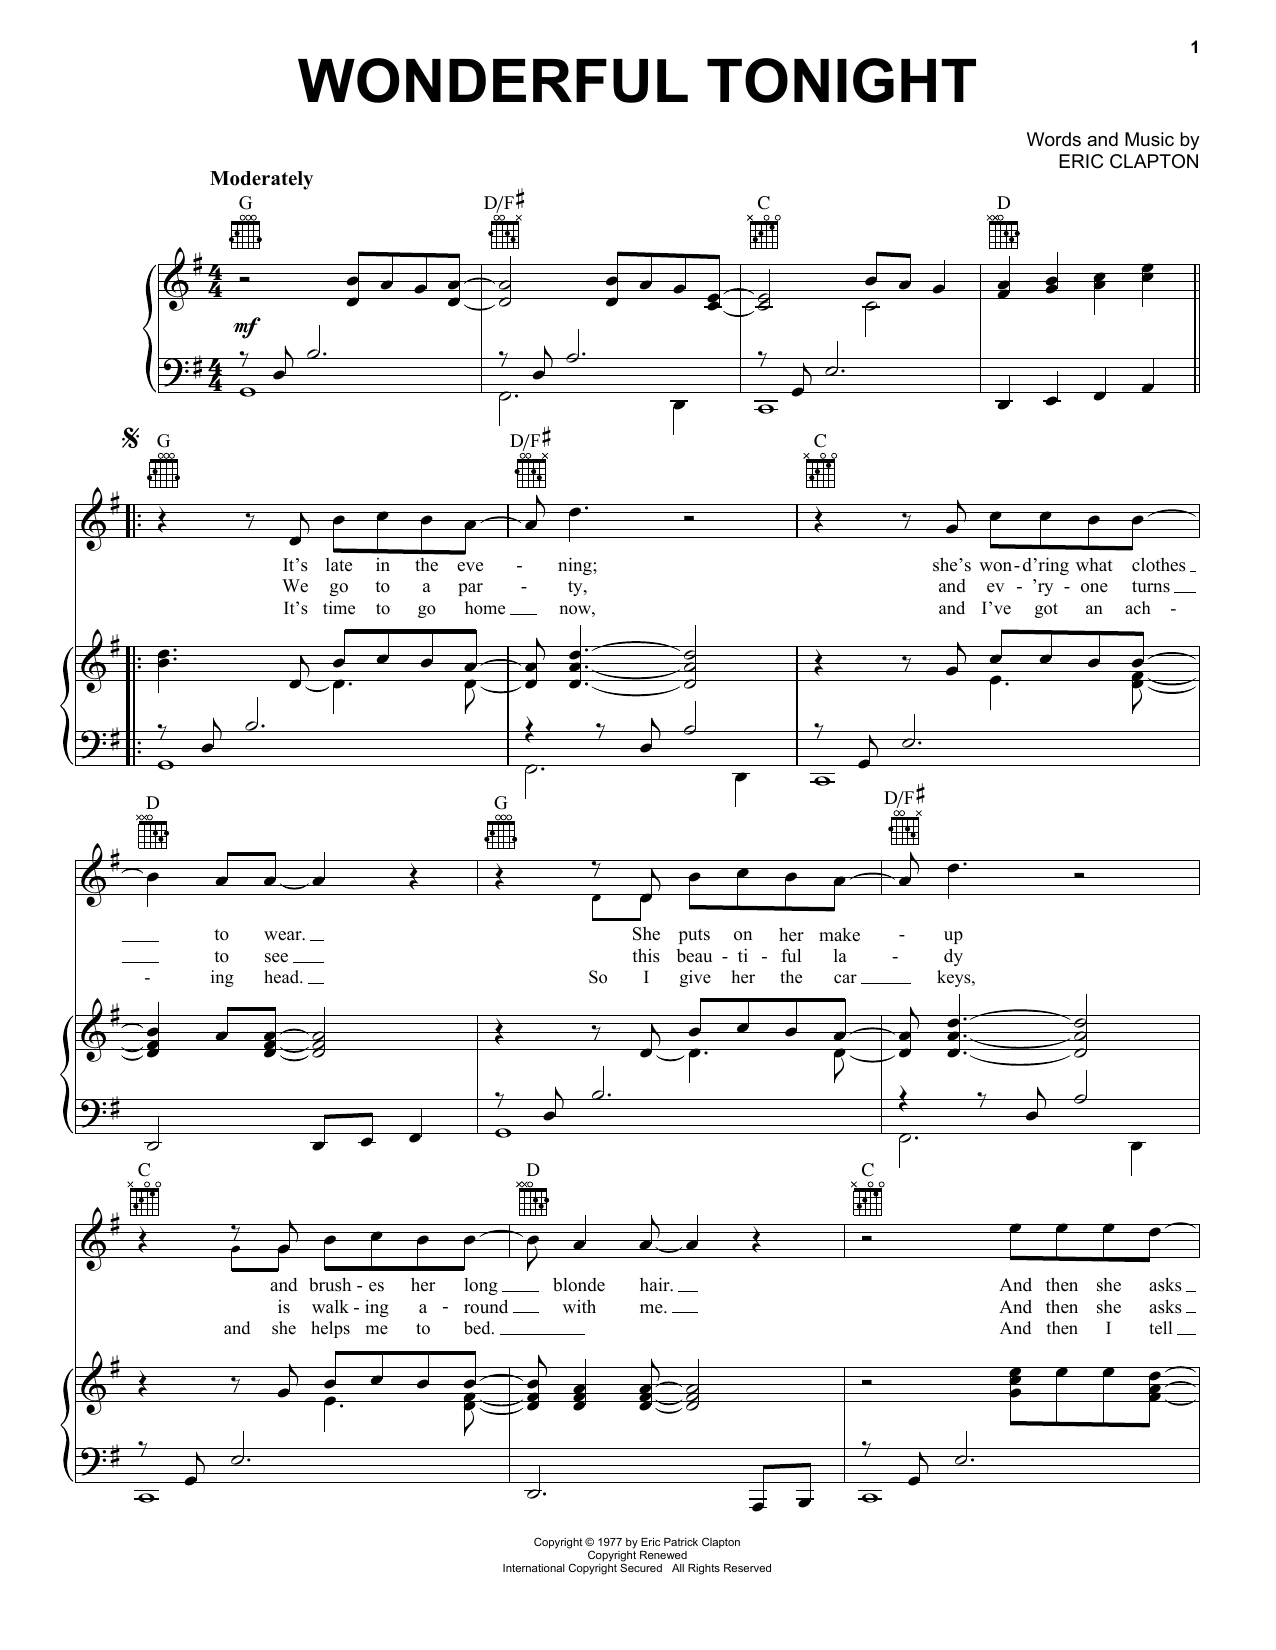 Eric Clapton Wonderful Tonight sheet music notes and chords. Download Printable PDF.